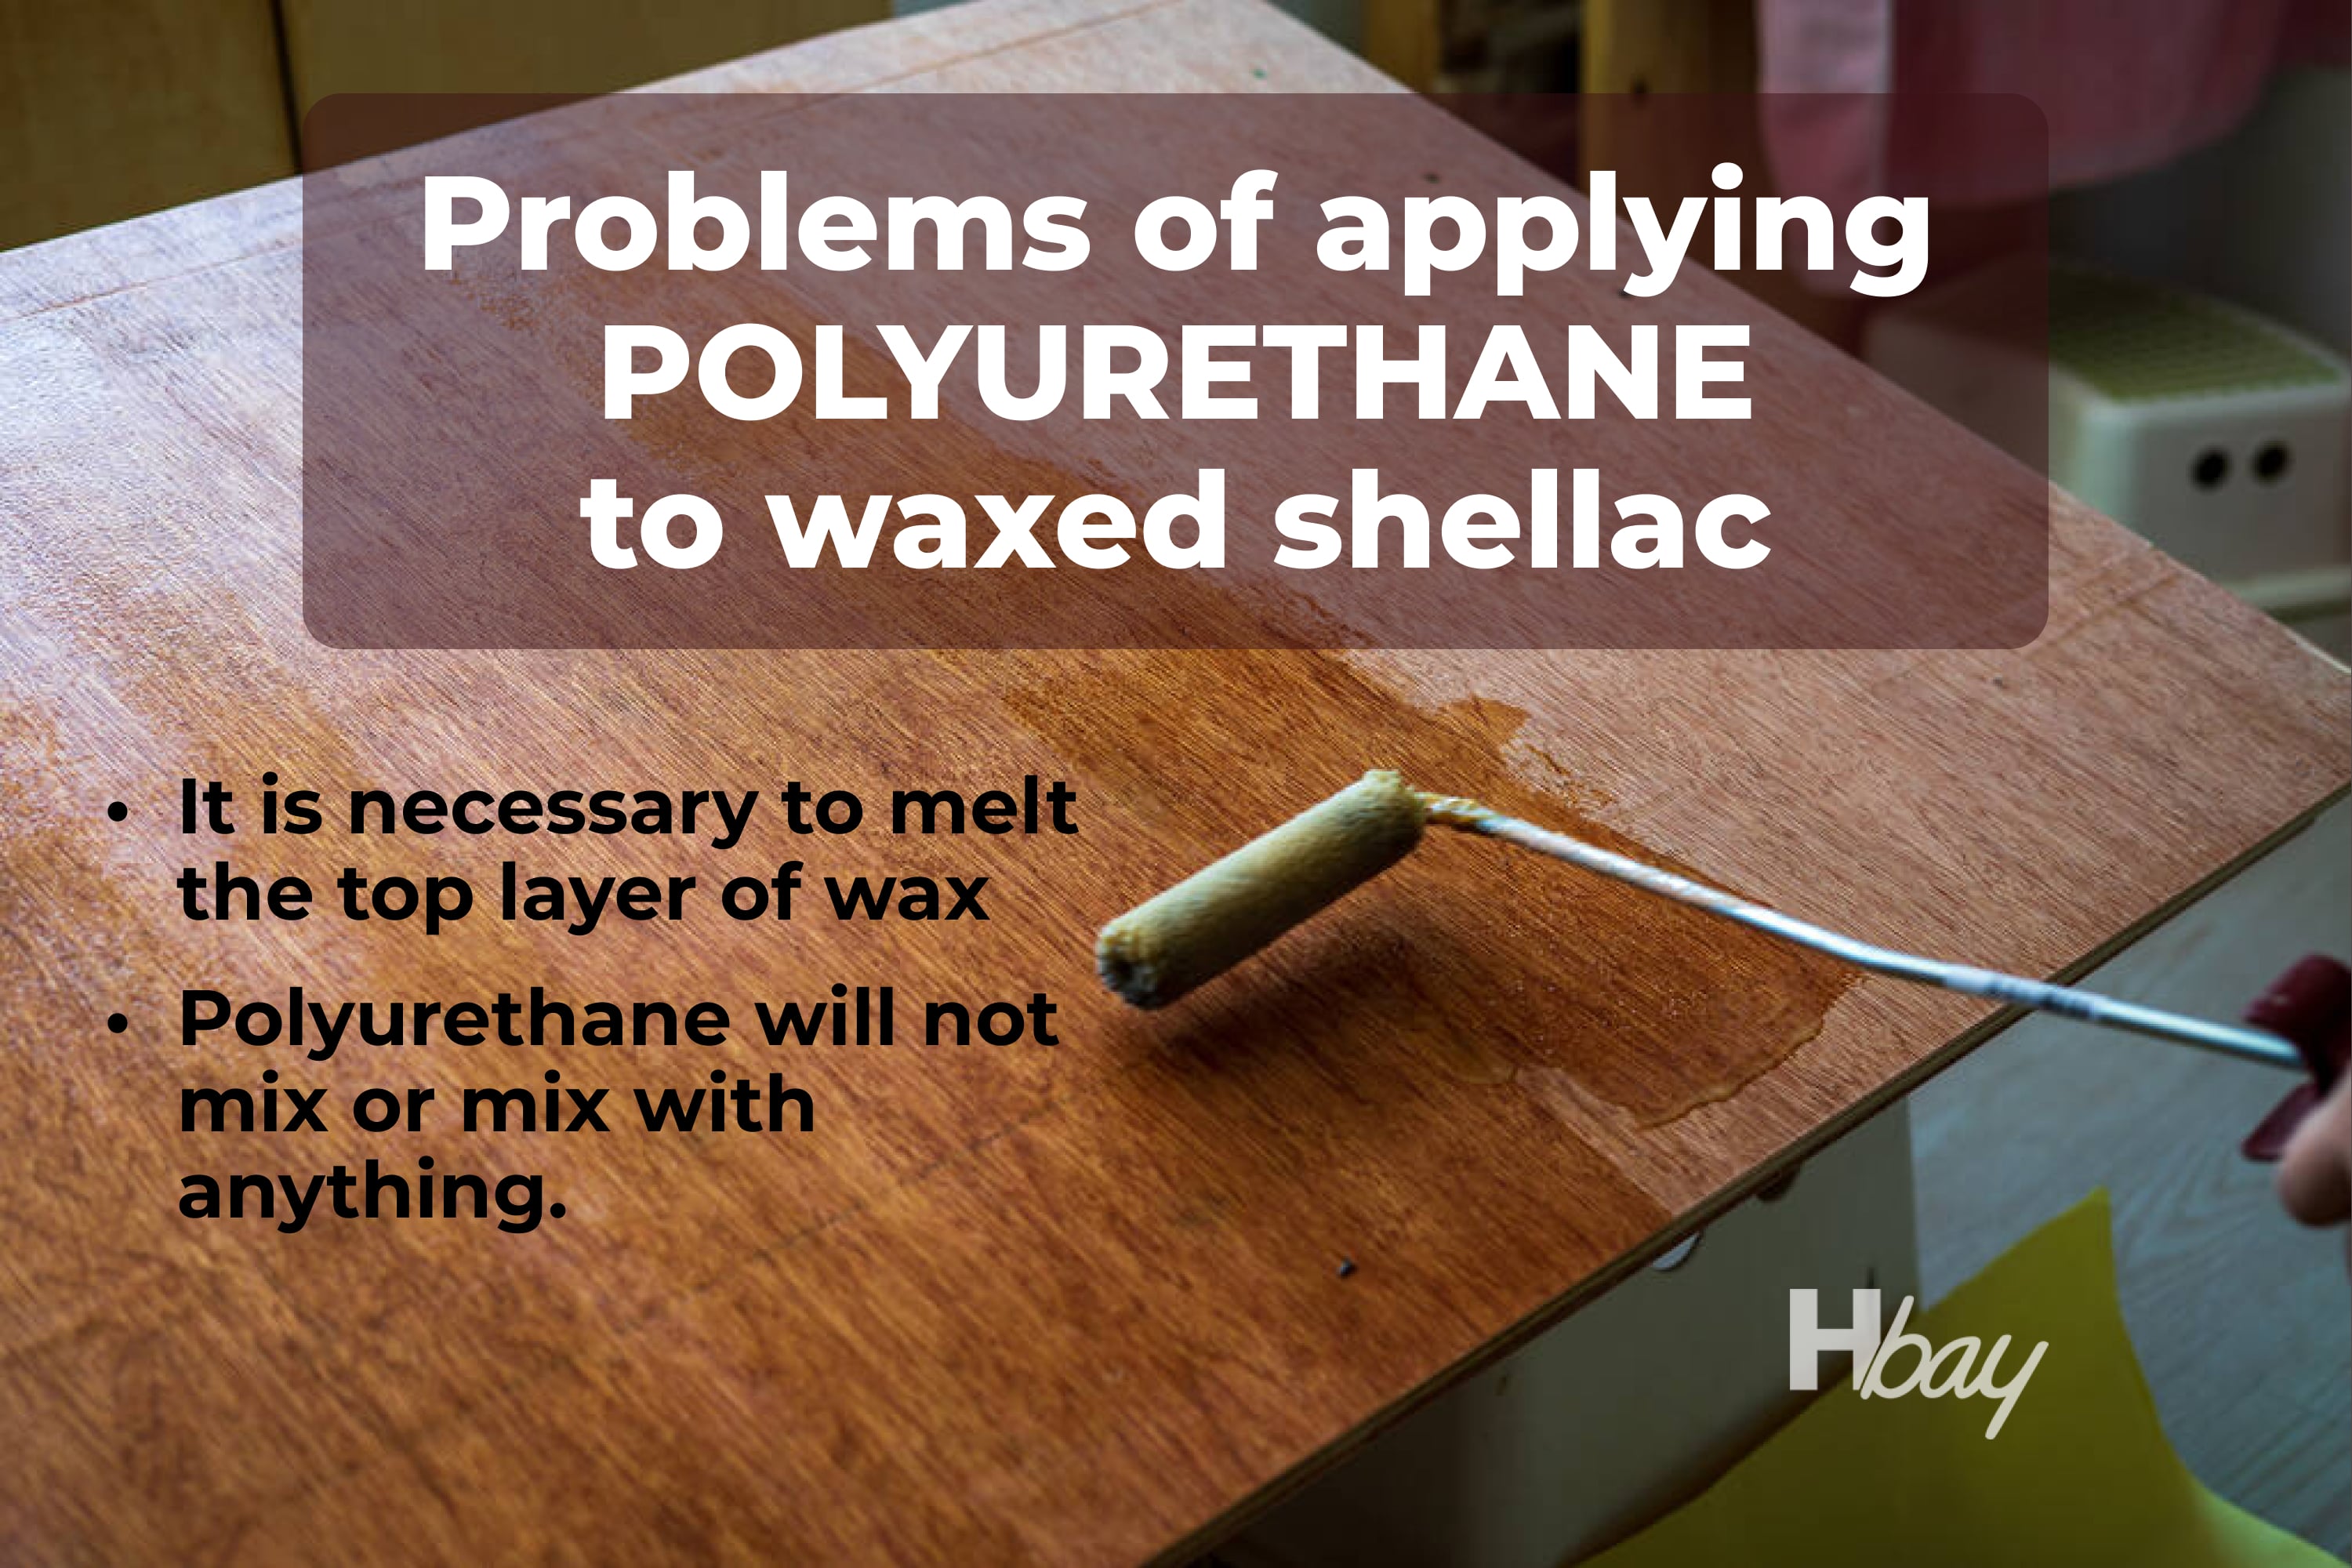 Problems of applying polyurethane to waxed shellac